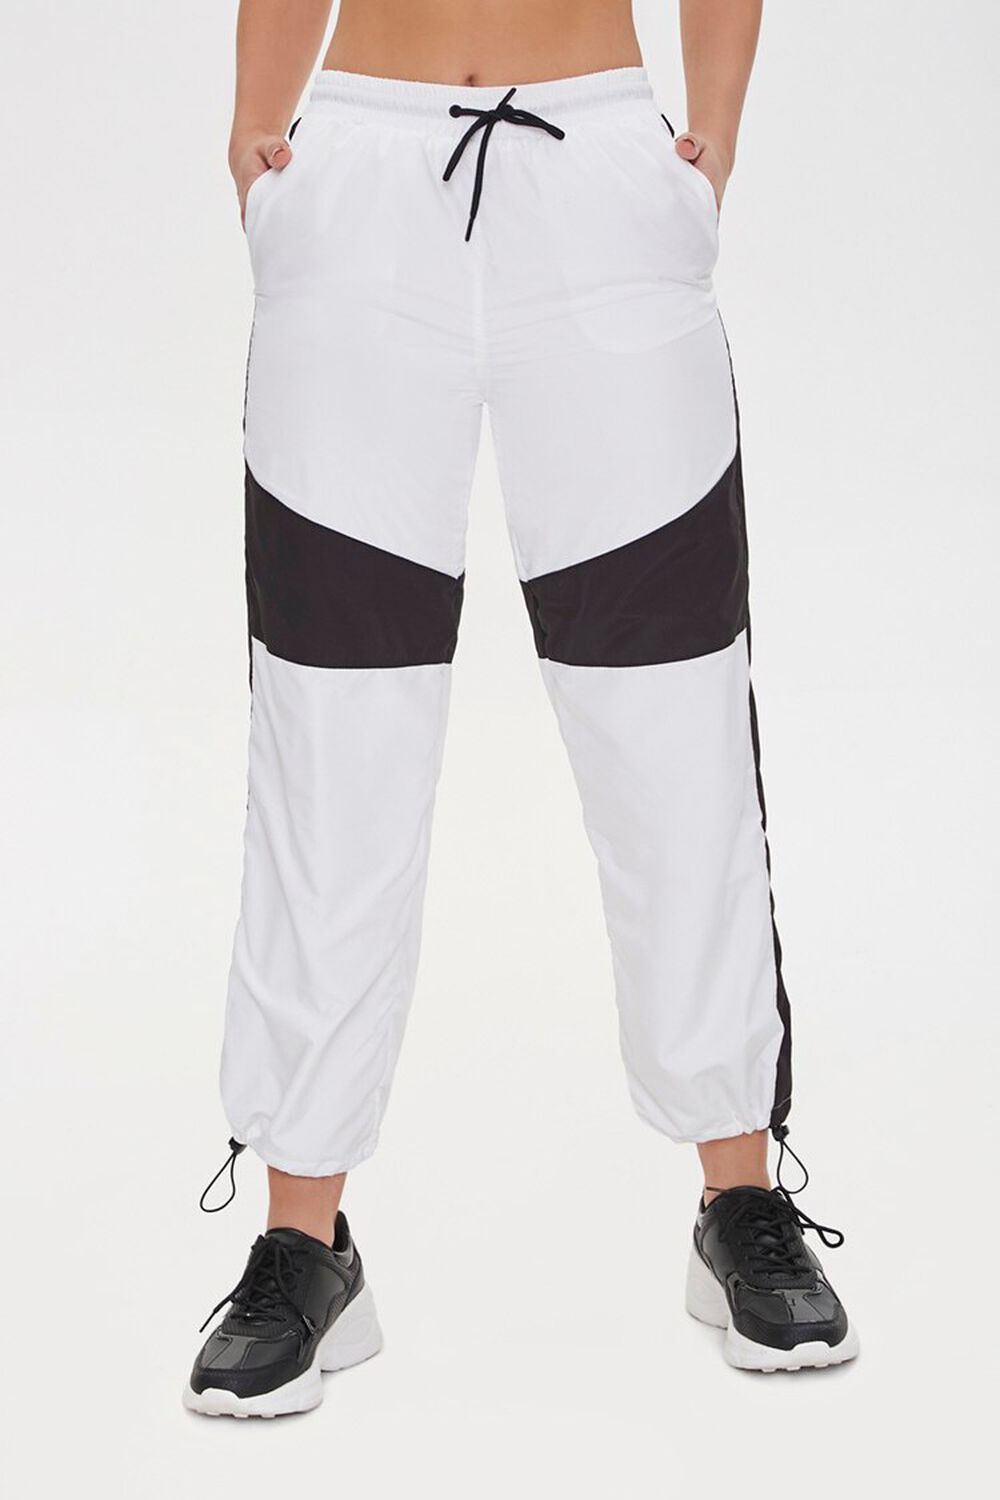 BLACK/WHITE Colorblock Windbreaker Pants, image 2